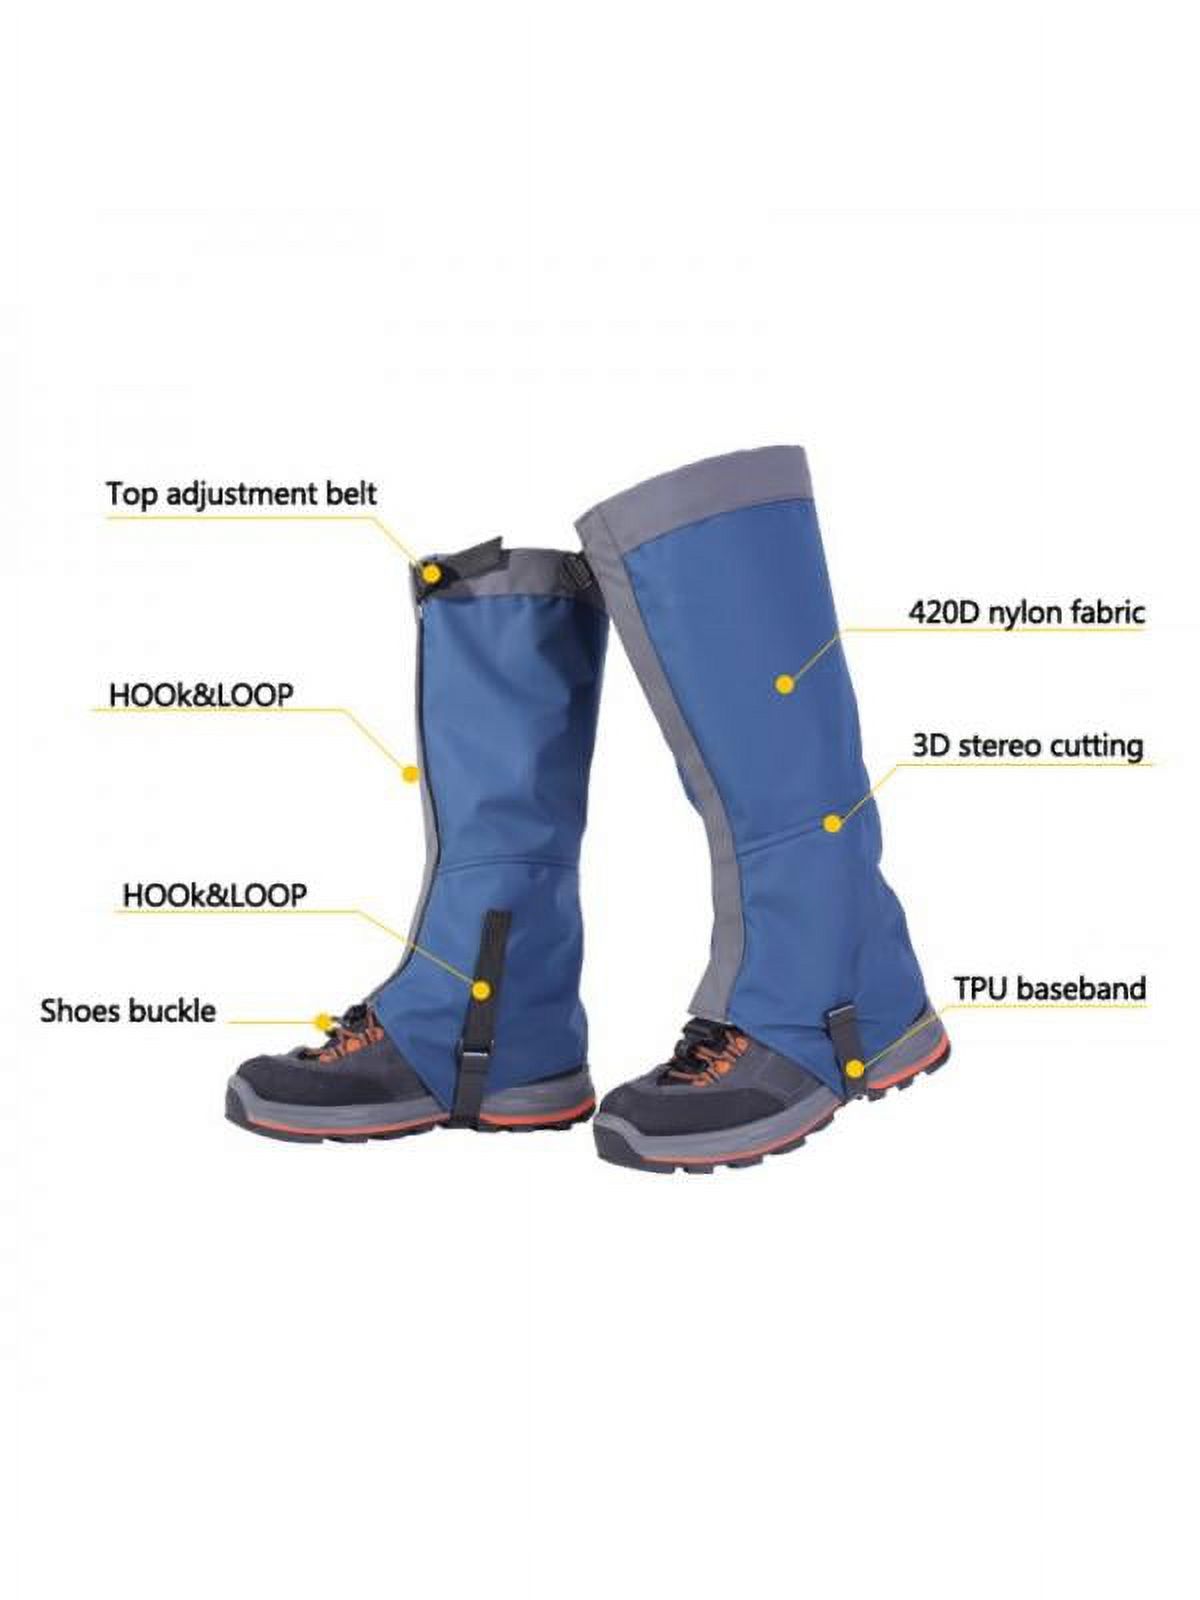 MarinaVida Mountain Hiking Hunting Boot Gaiters Waterproof Snow Snake High Leg Shoes Cover - image 3 of 6